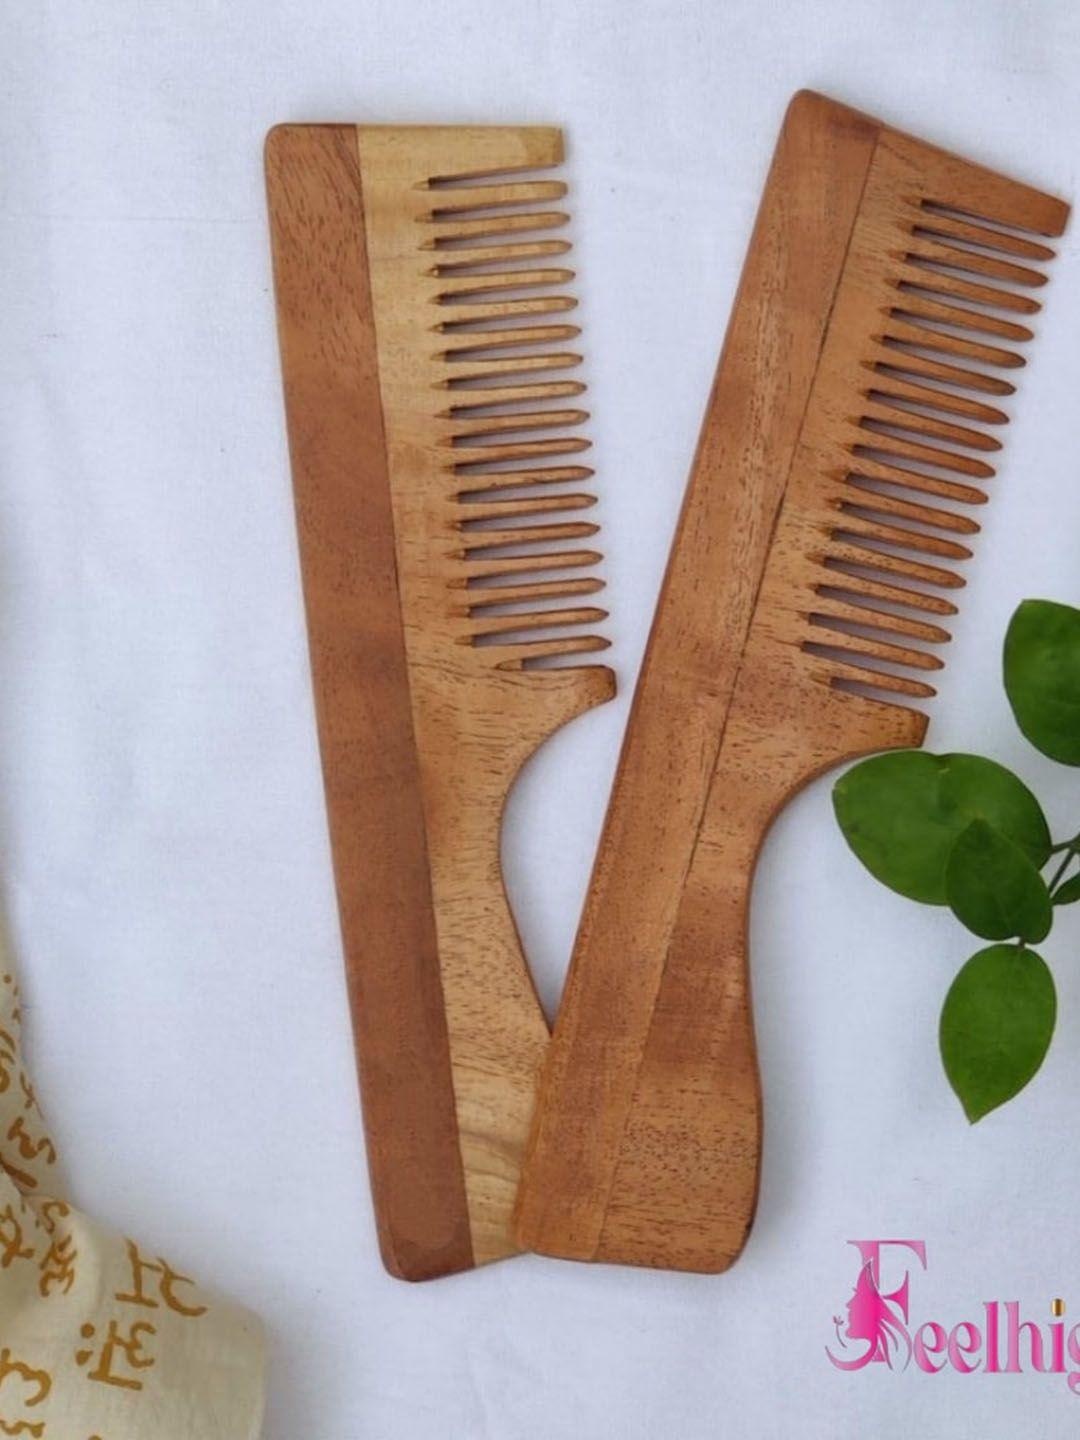 feelhigh set of 2 anti-bacteria & anti-dandruff neem wooden combs - brown